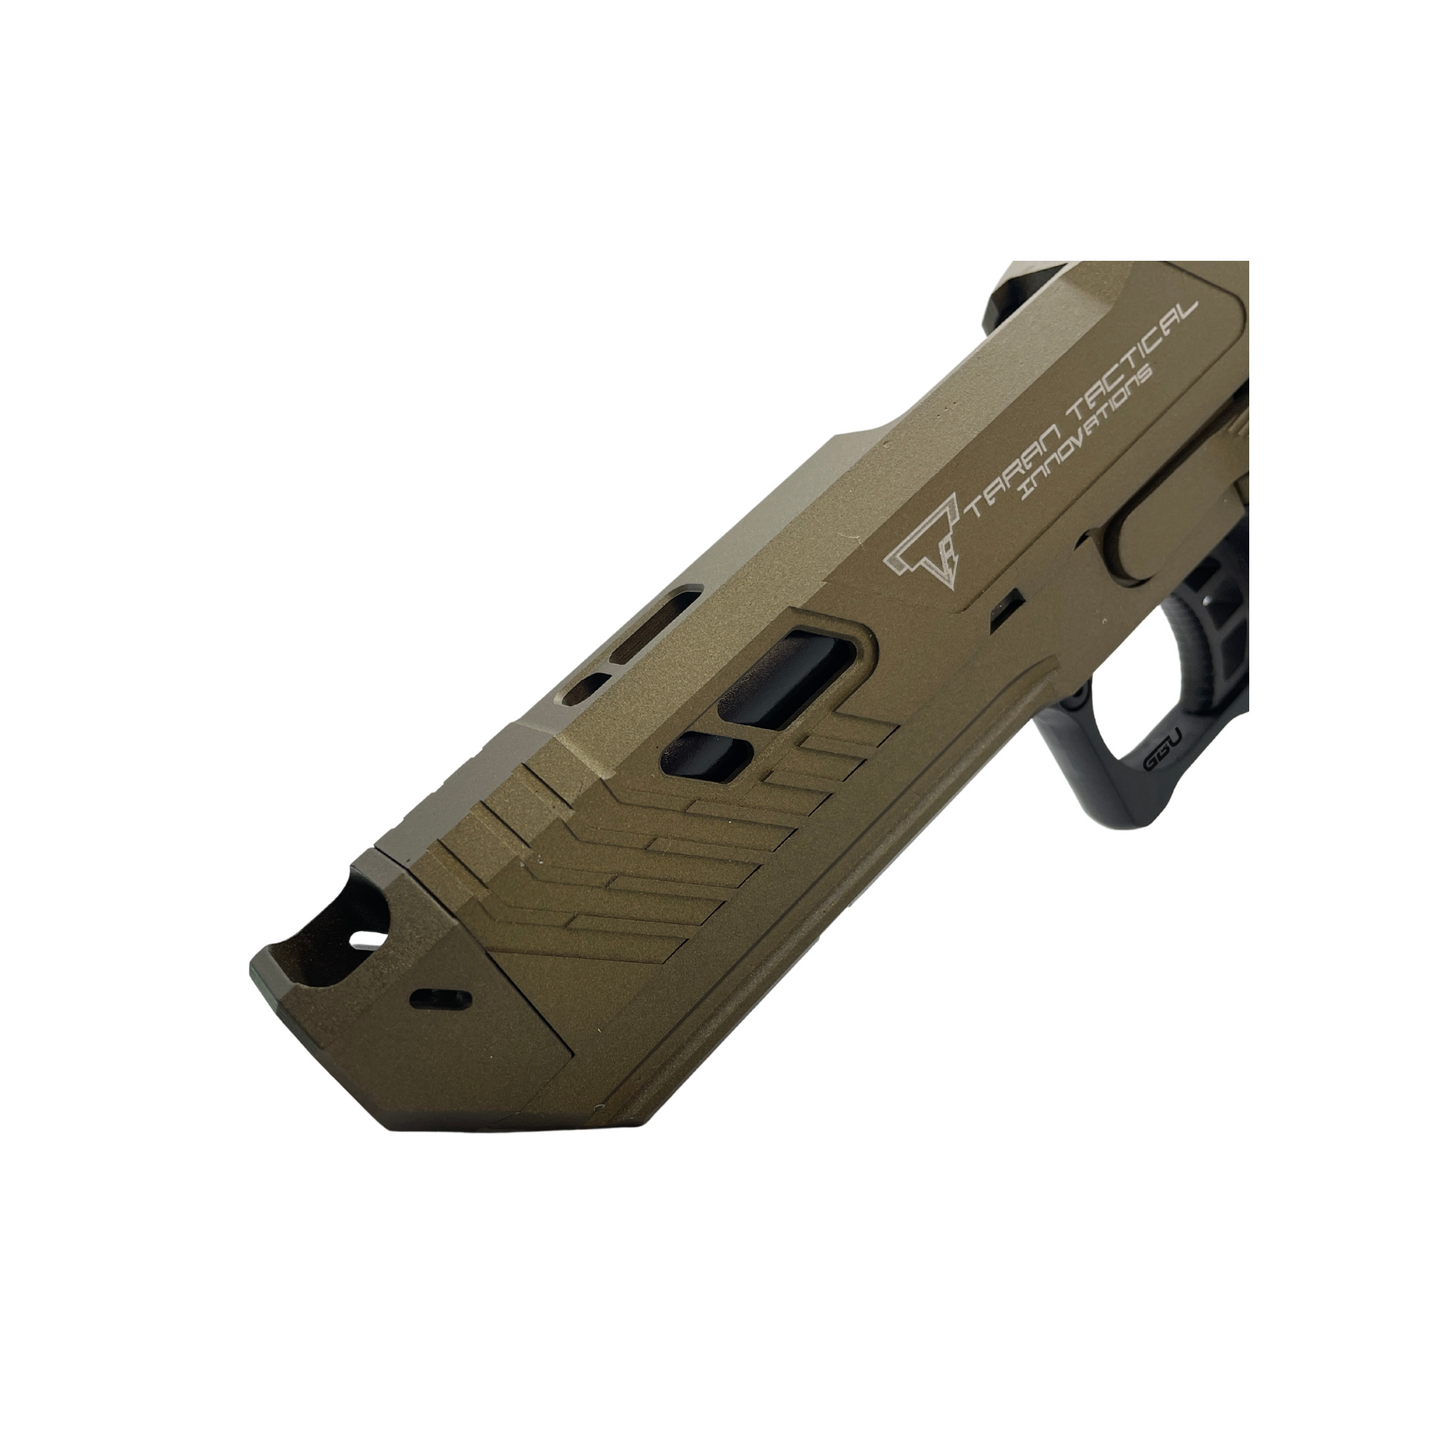 Golden Eagle "TTI Sand Viper" (3355)  Hi-Capa 5.1 Gas Pistol - Gel Blaster